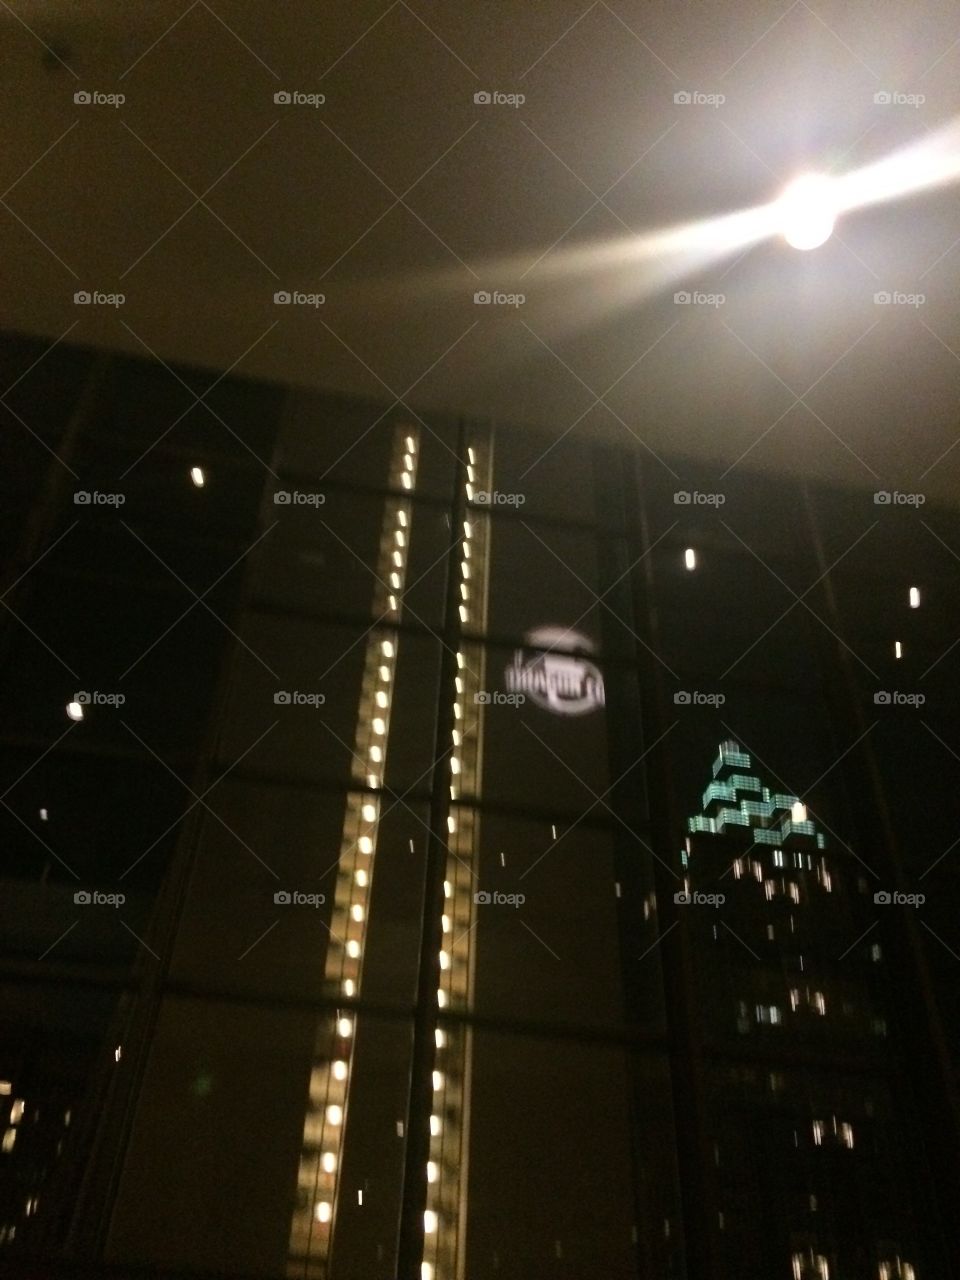 Dragoncon symbol spotlight on downtown hotel in Atlanta Georgia. 